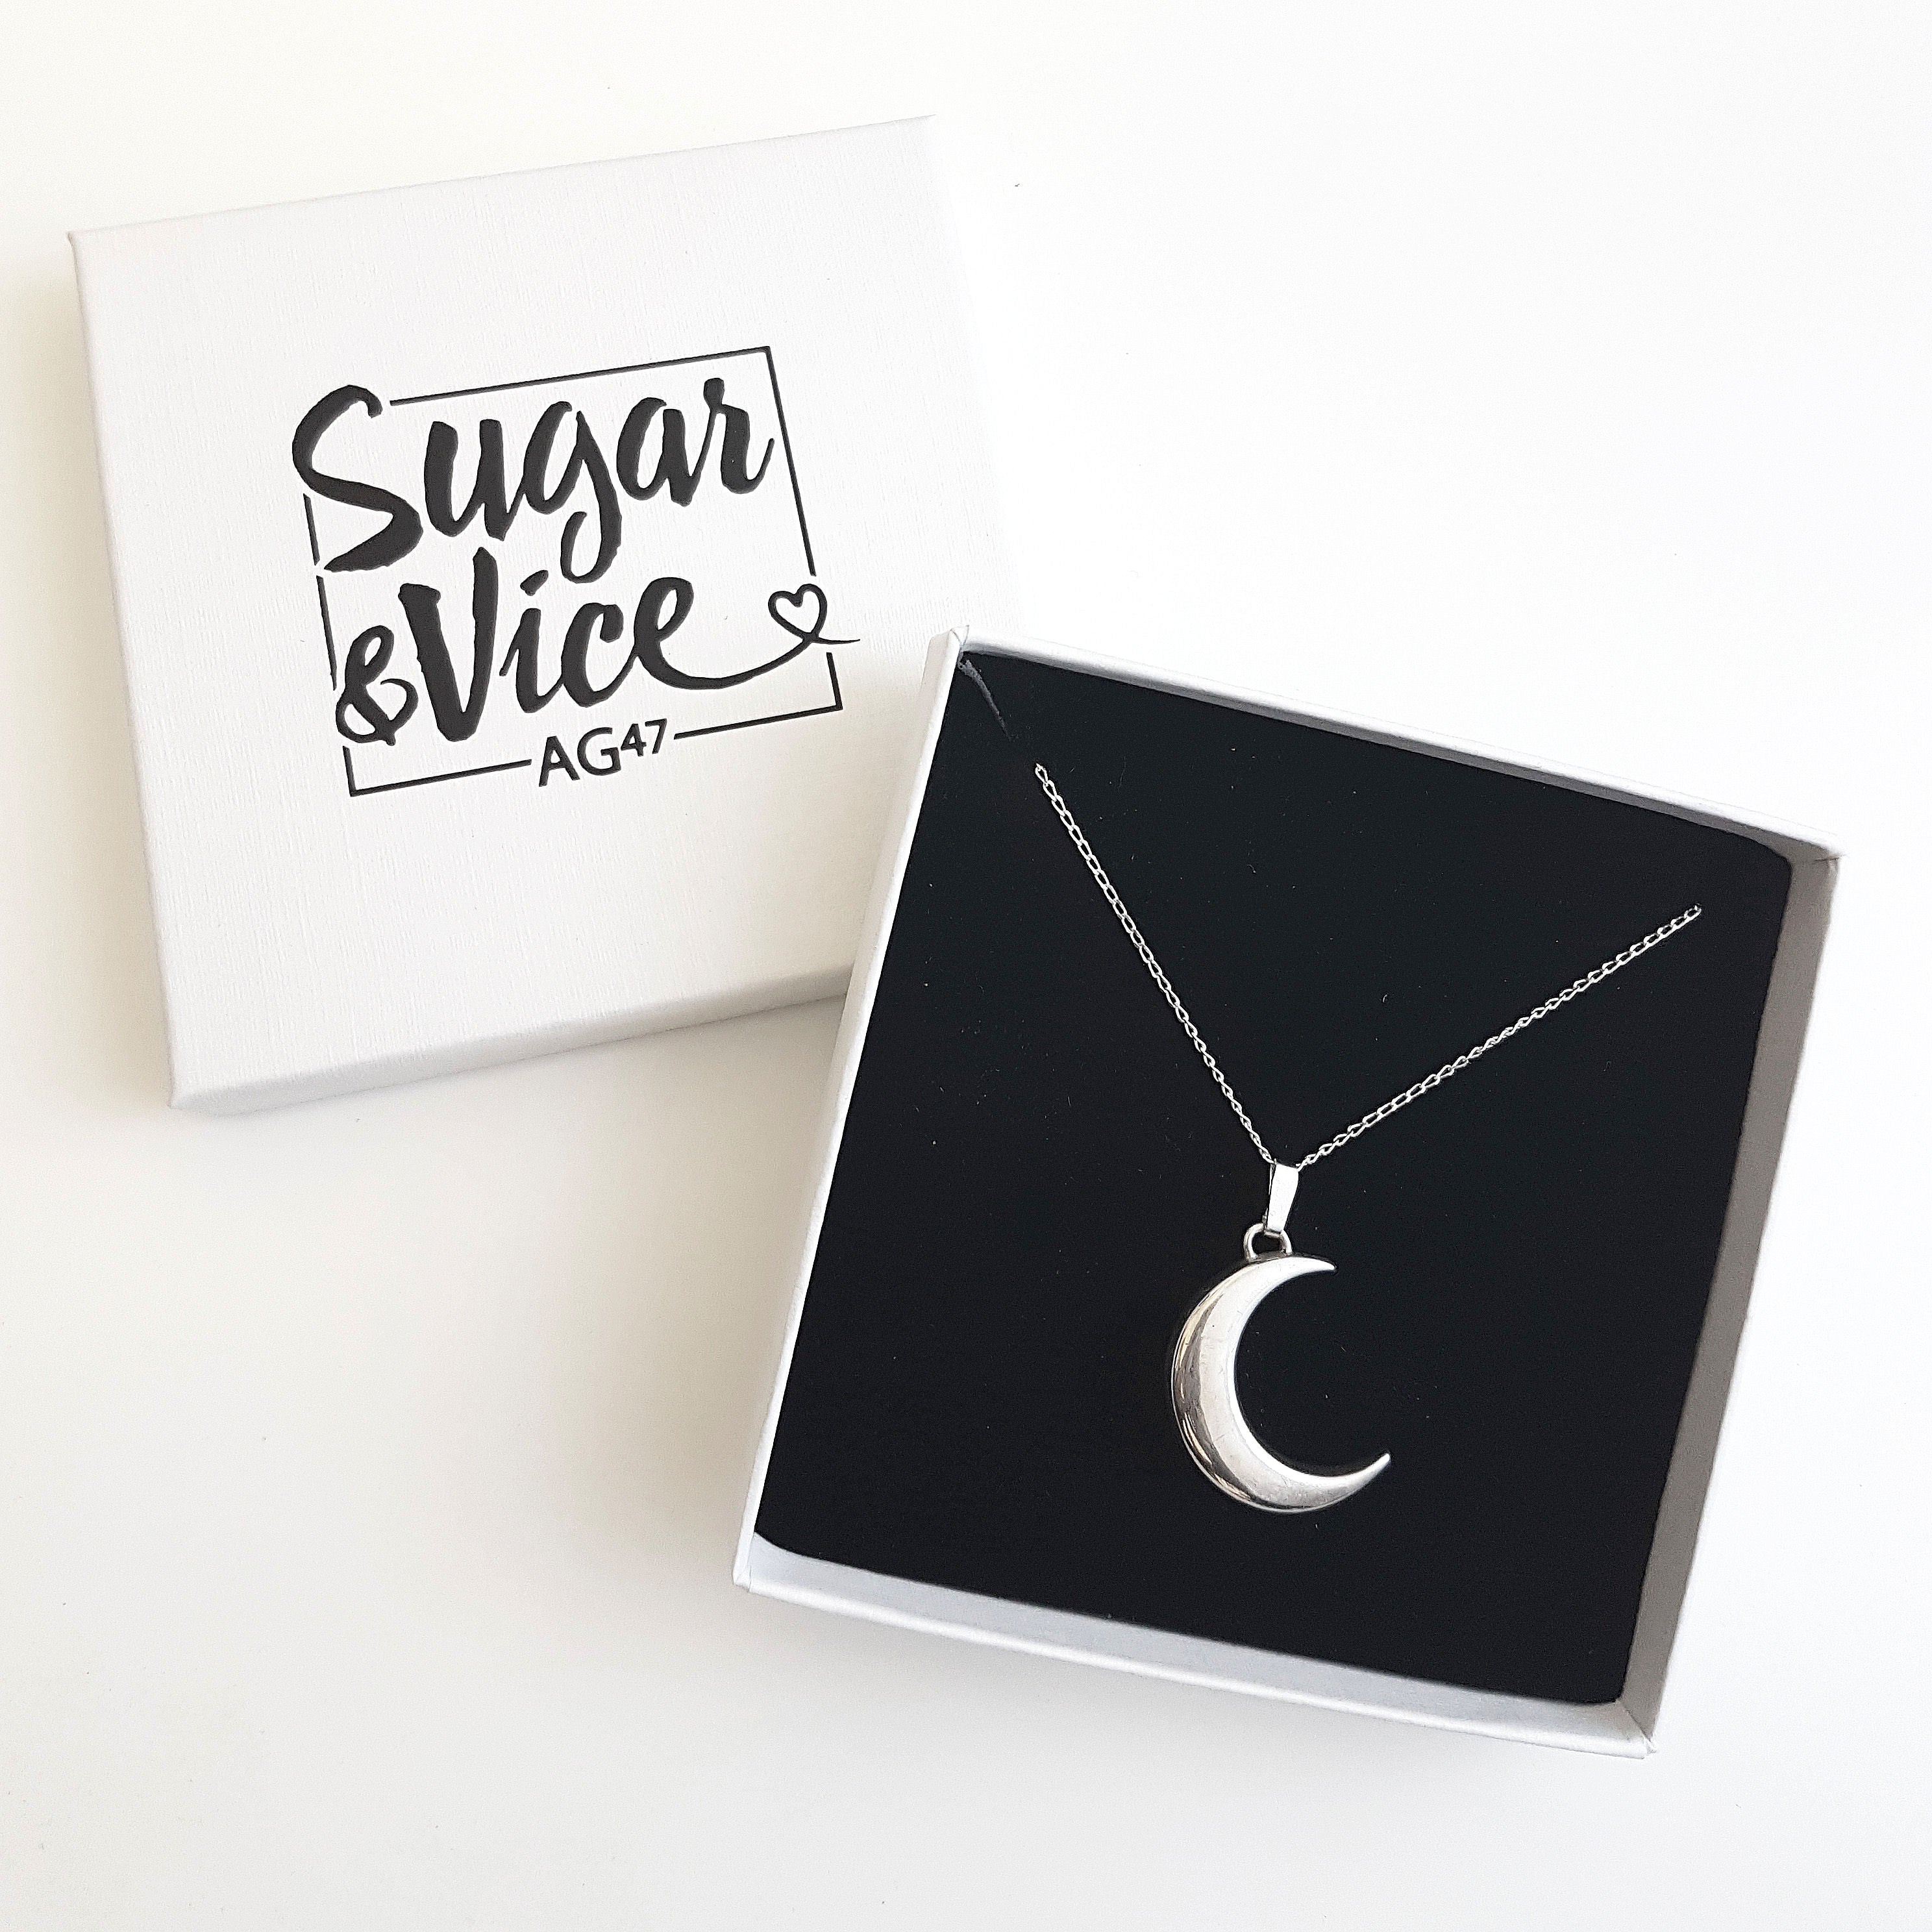 Sugar & Vice AG47 Moon Necklace